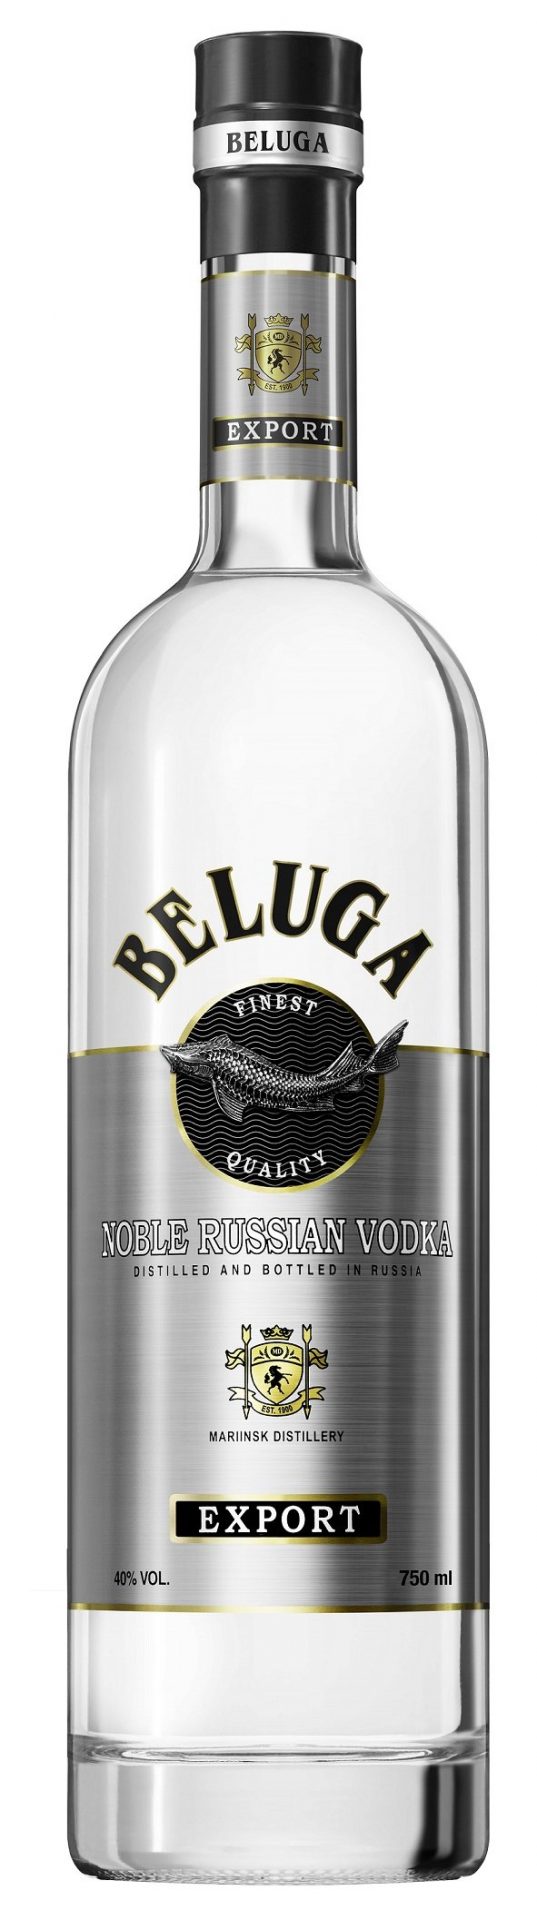 Beluga Noble Russian Vodka - 750ml